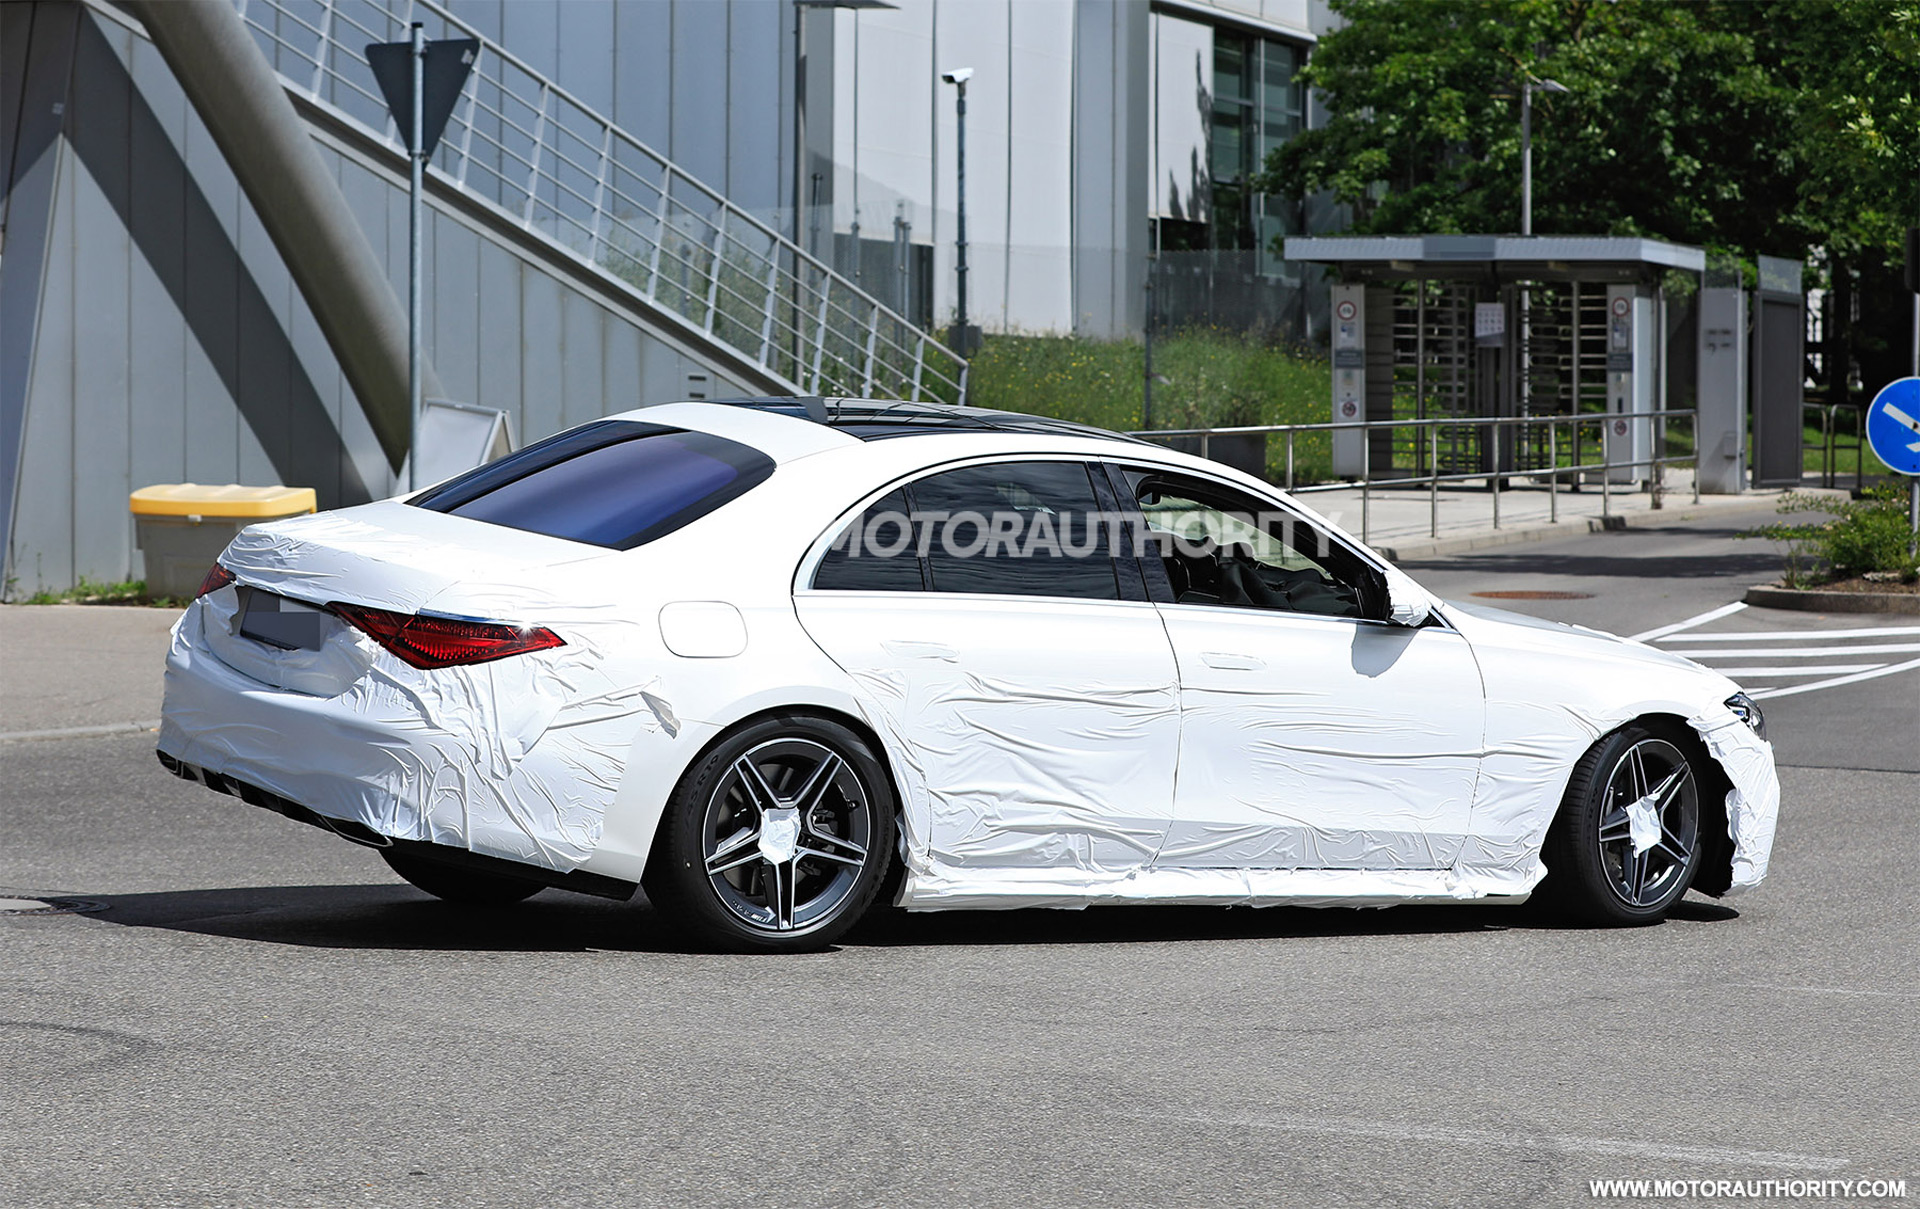 2020 - [Mercedes-Benz] Classe S - Page 15 2021-mercedes-benz-s-class-spy-shots--photo-credits-baldauf-sb-medien_100752647_h